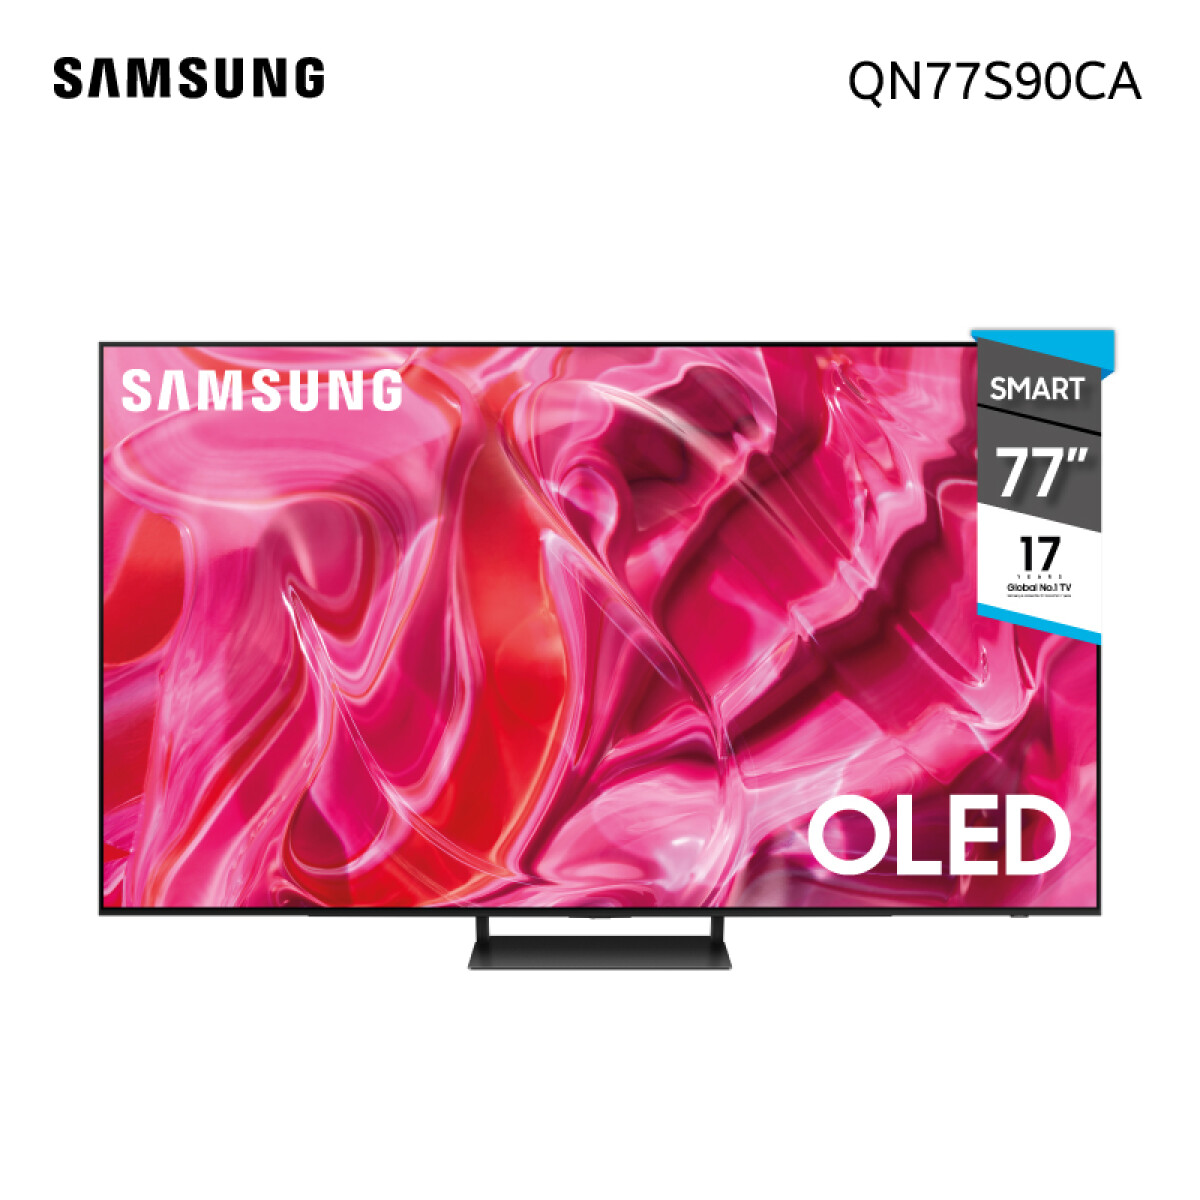 OLED Smart TV 77” 4K SAMSUNG QN77S90CA - 001 